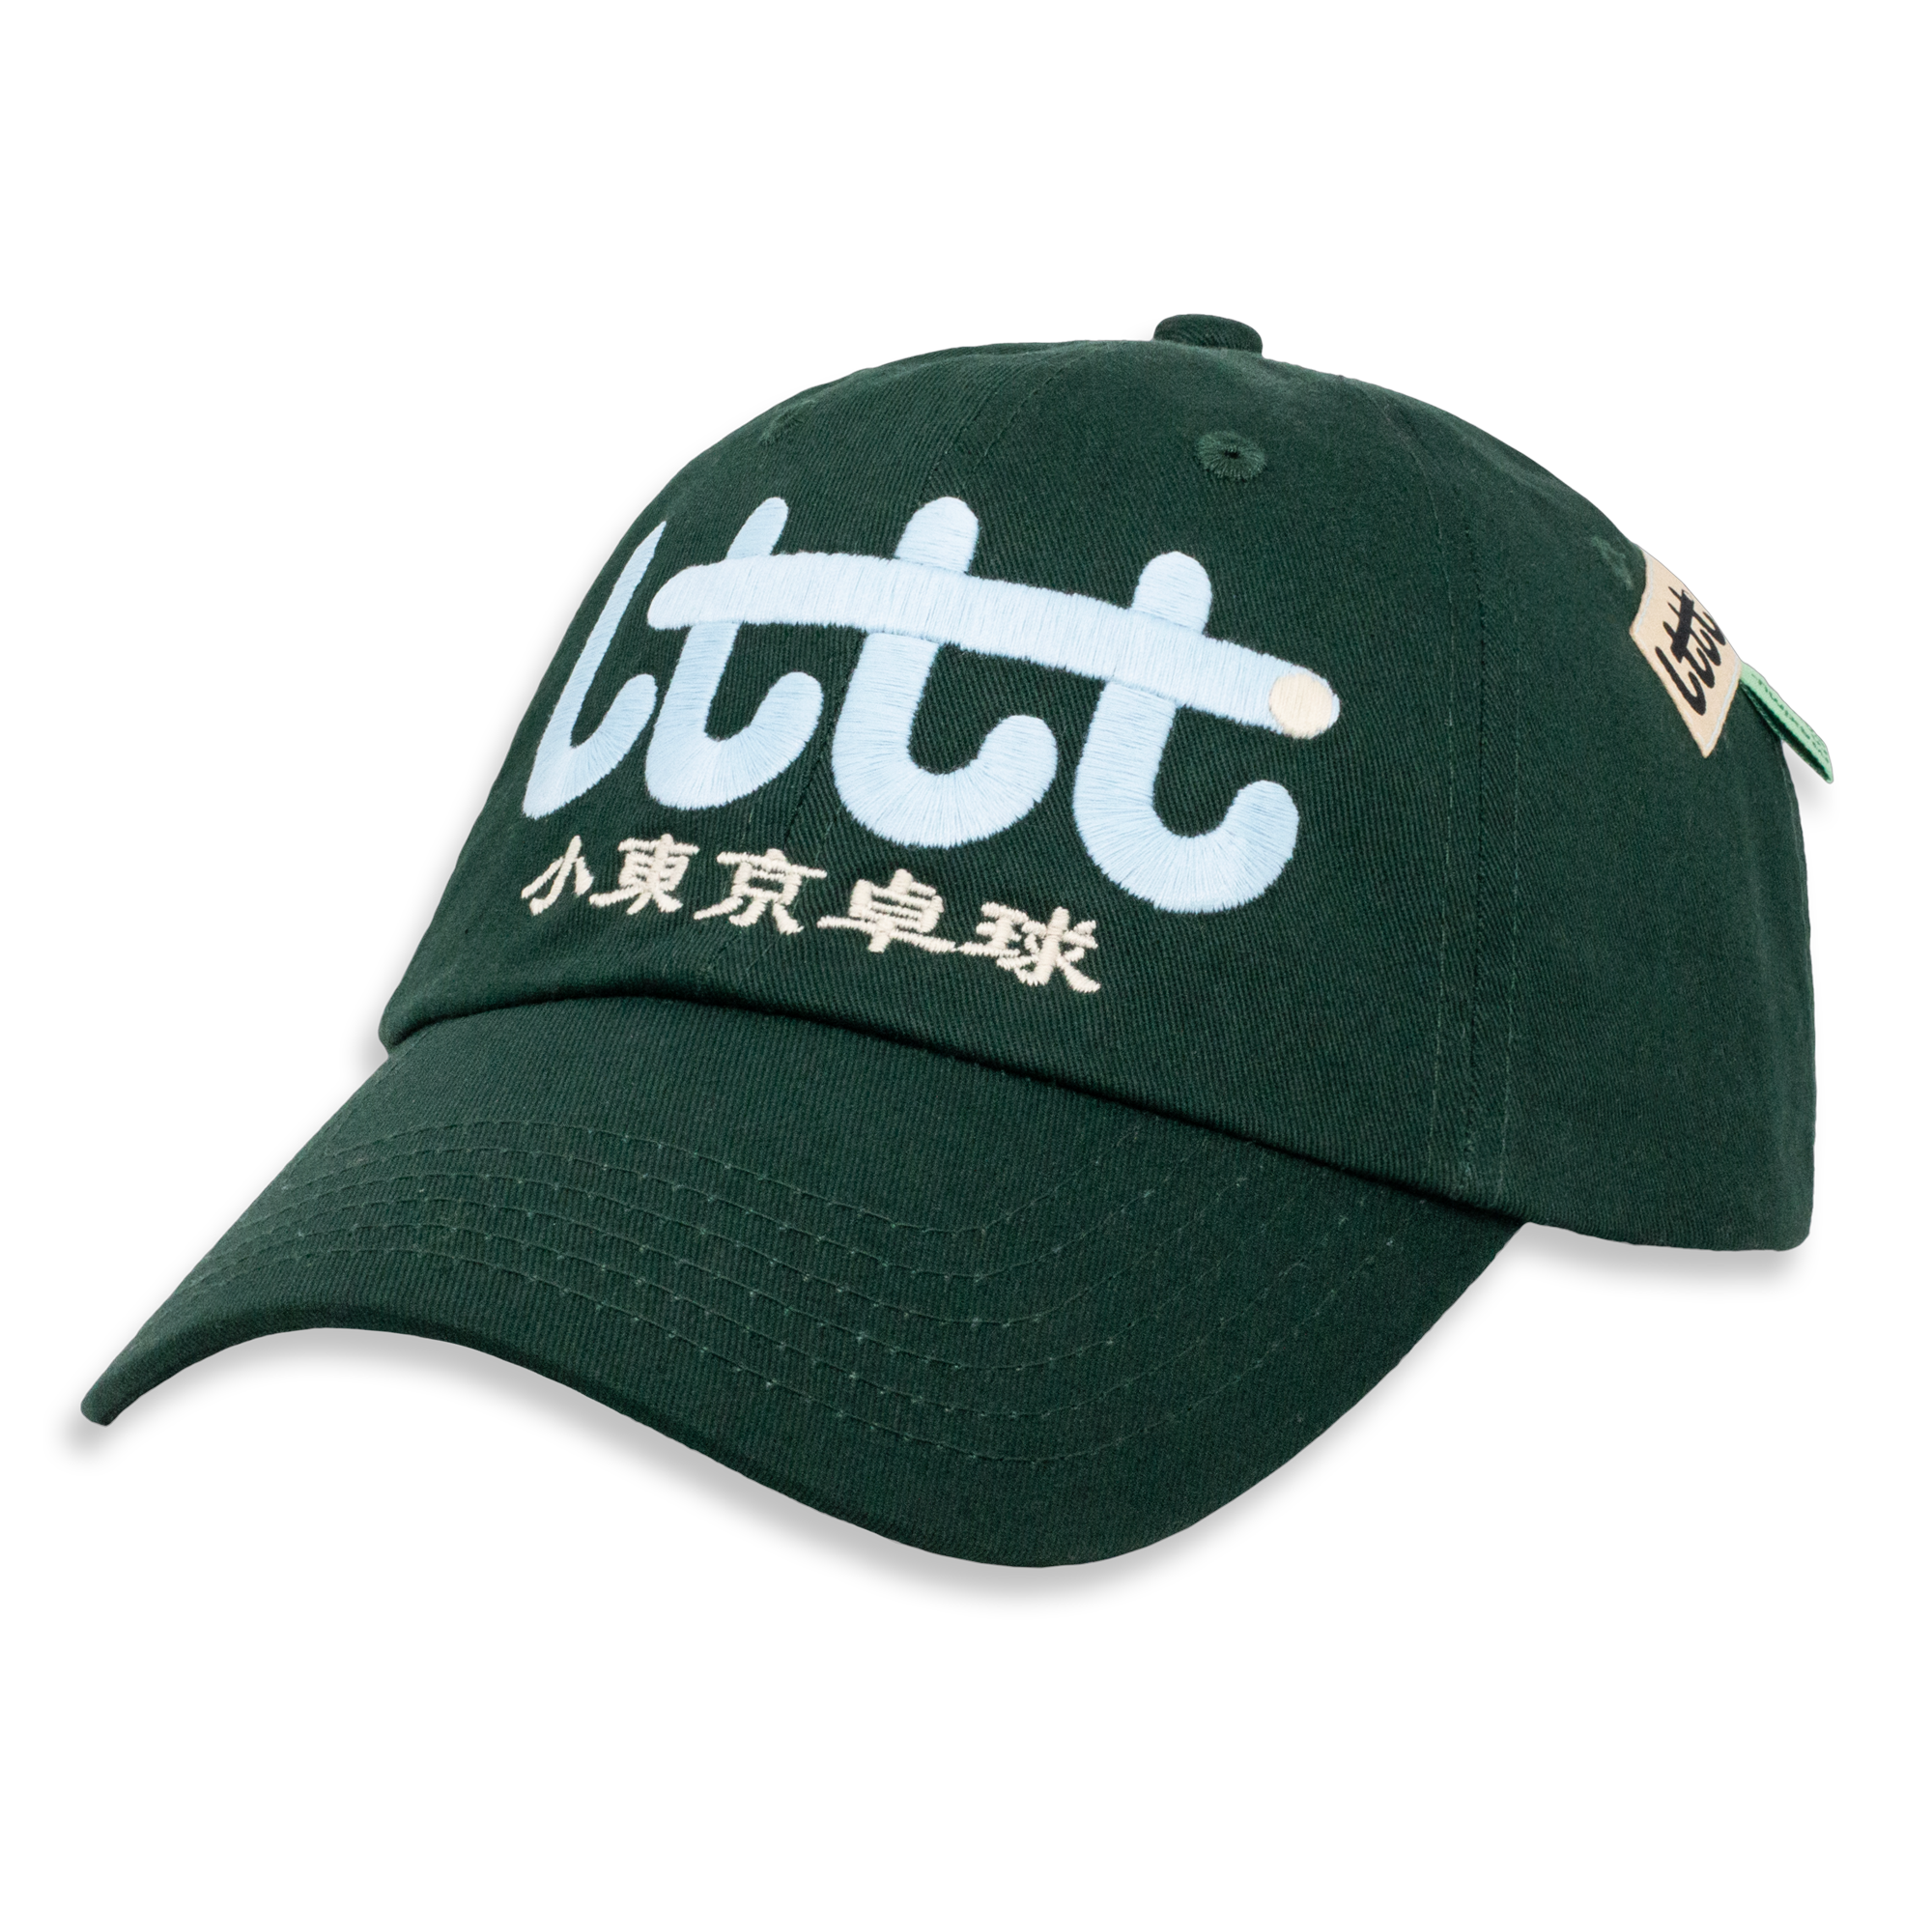 LTTT - Smart Cap